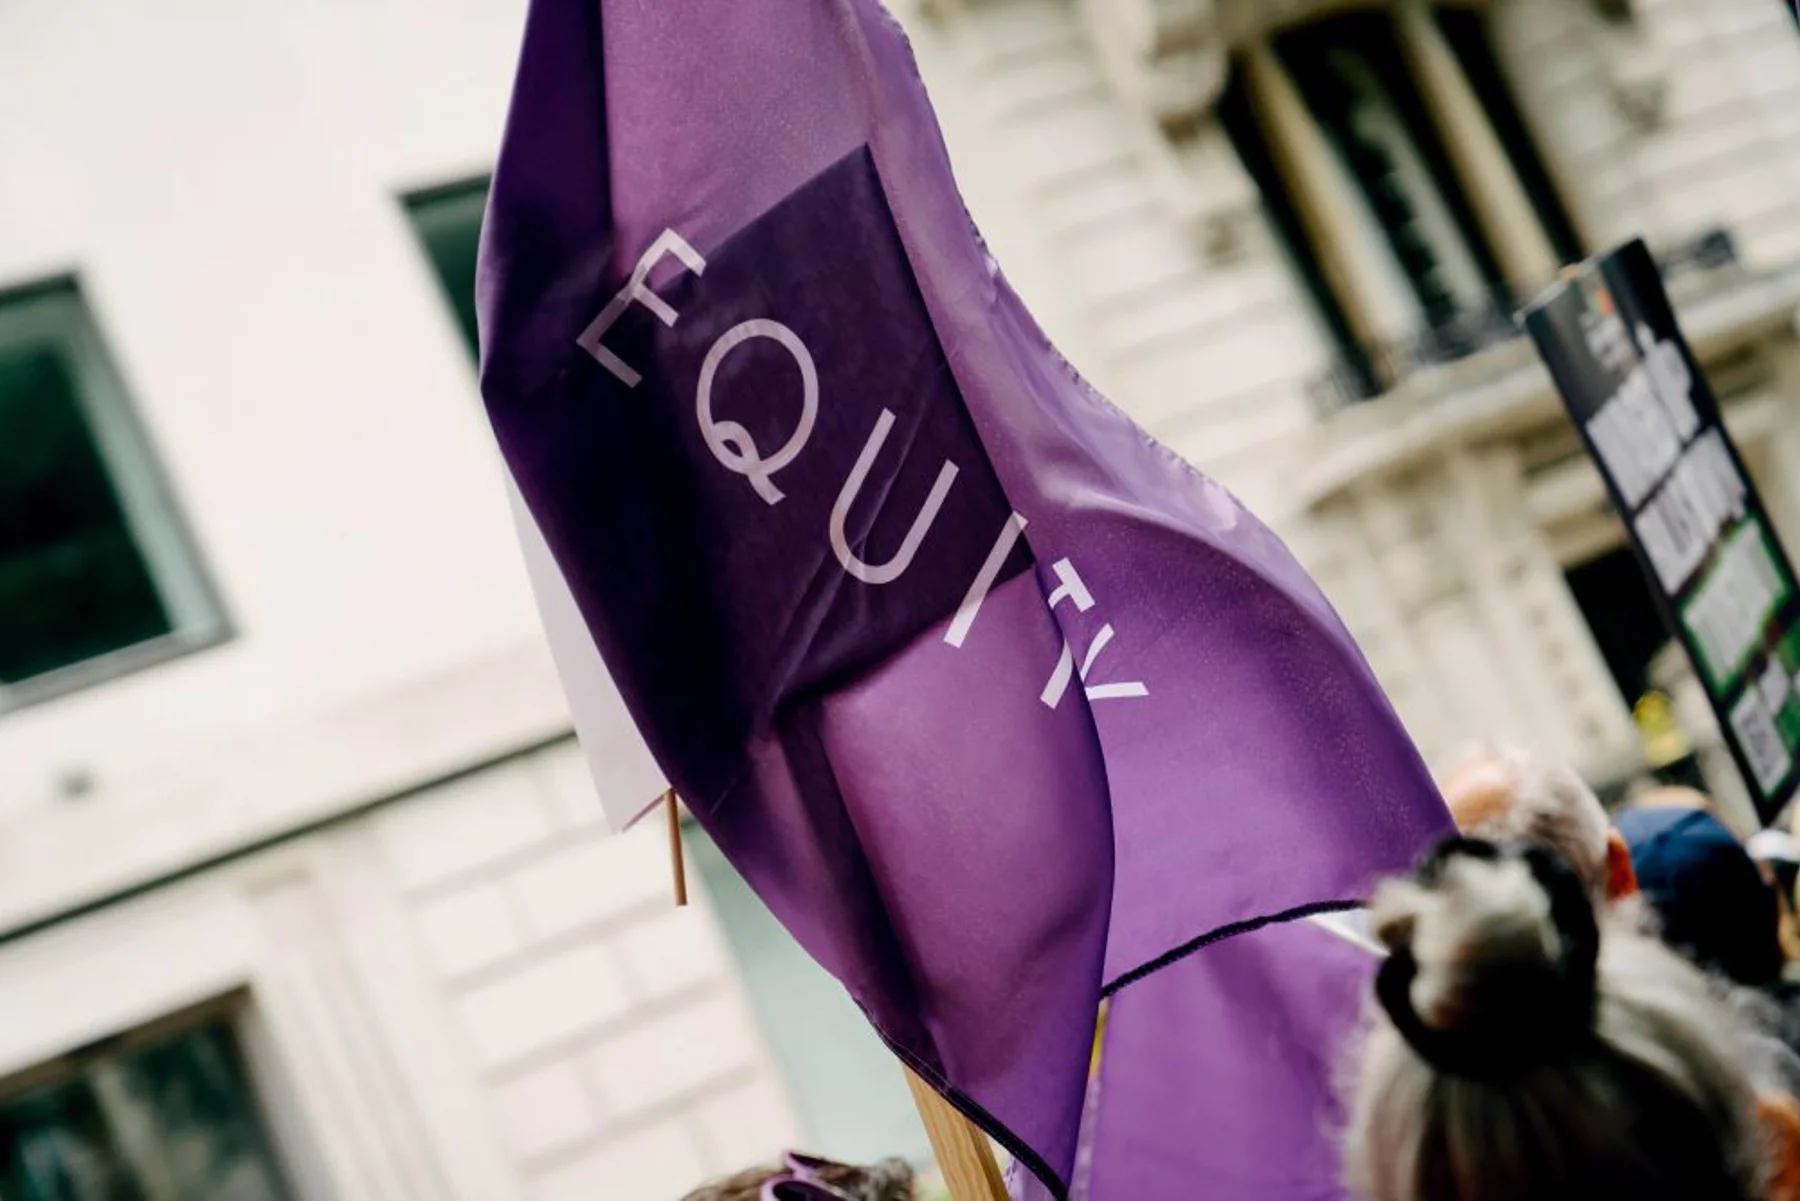 Purple Equity branded flag.